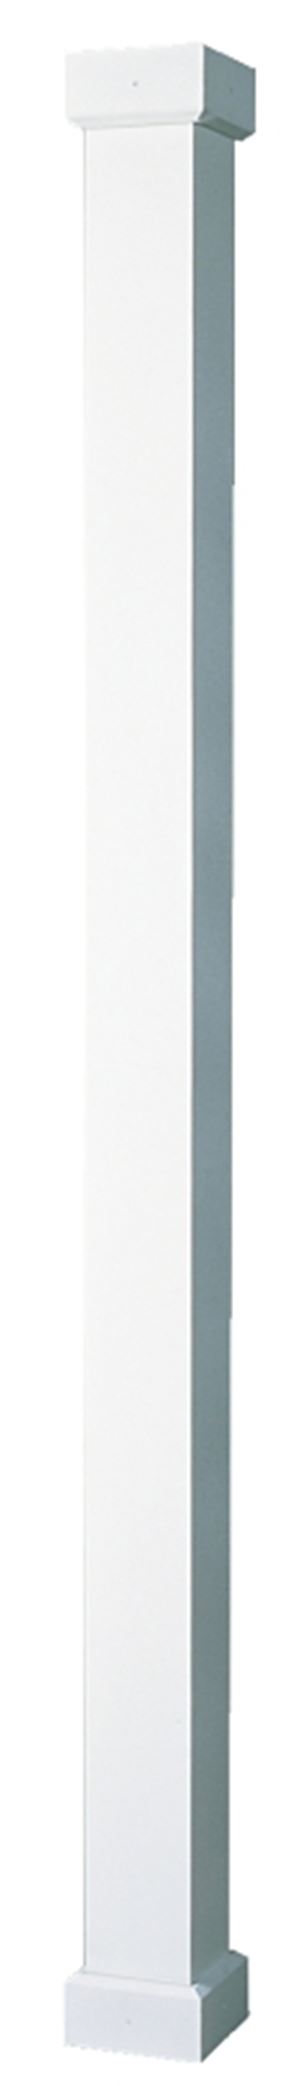 AFCO Empire Series 600EC0708K Tradition Column Kit, 8 ft H, Square, Aluminum, White